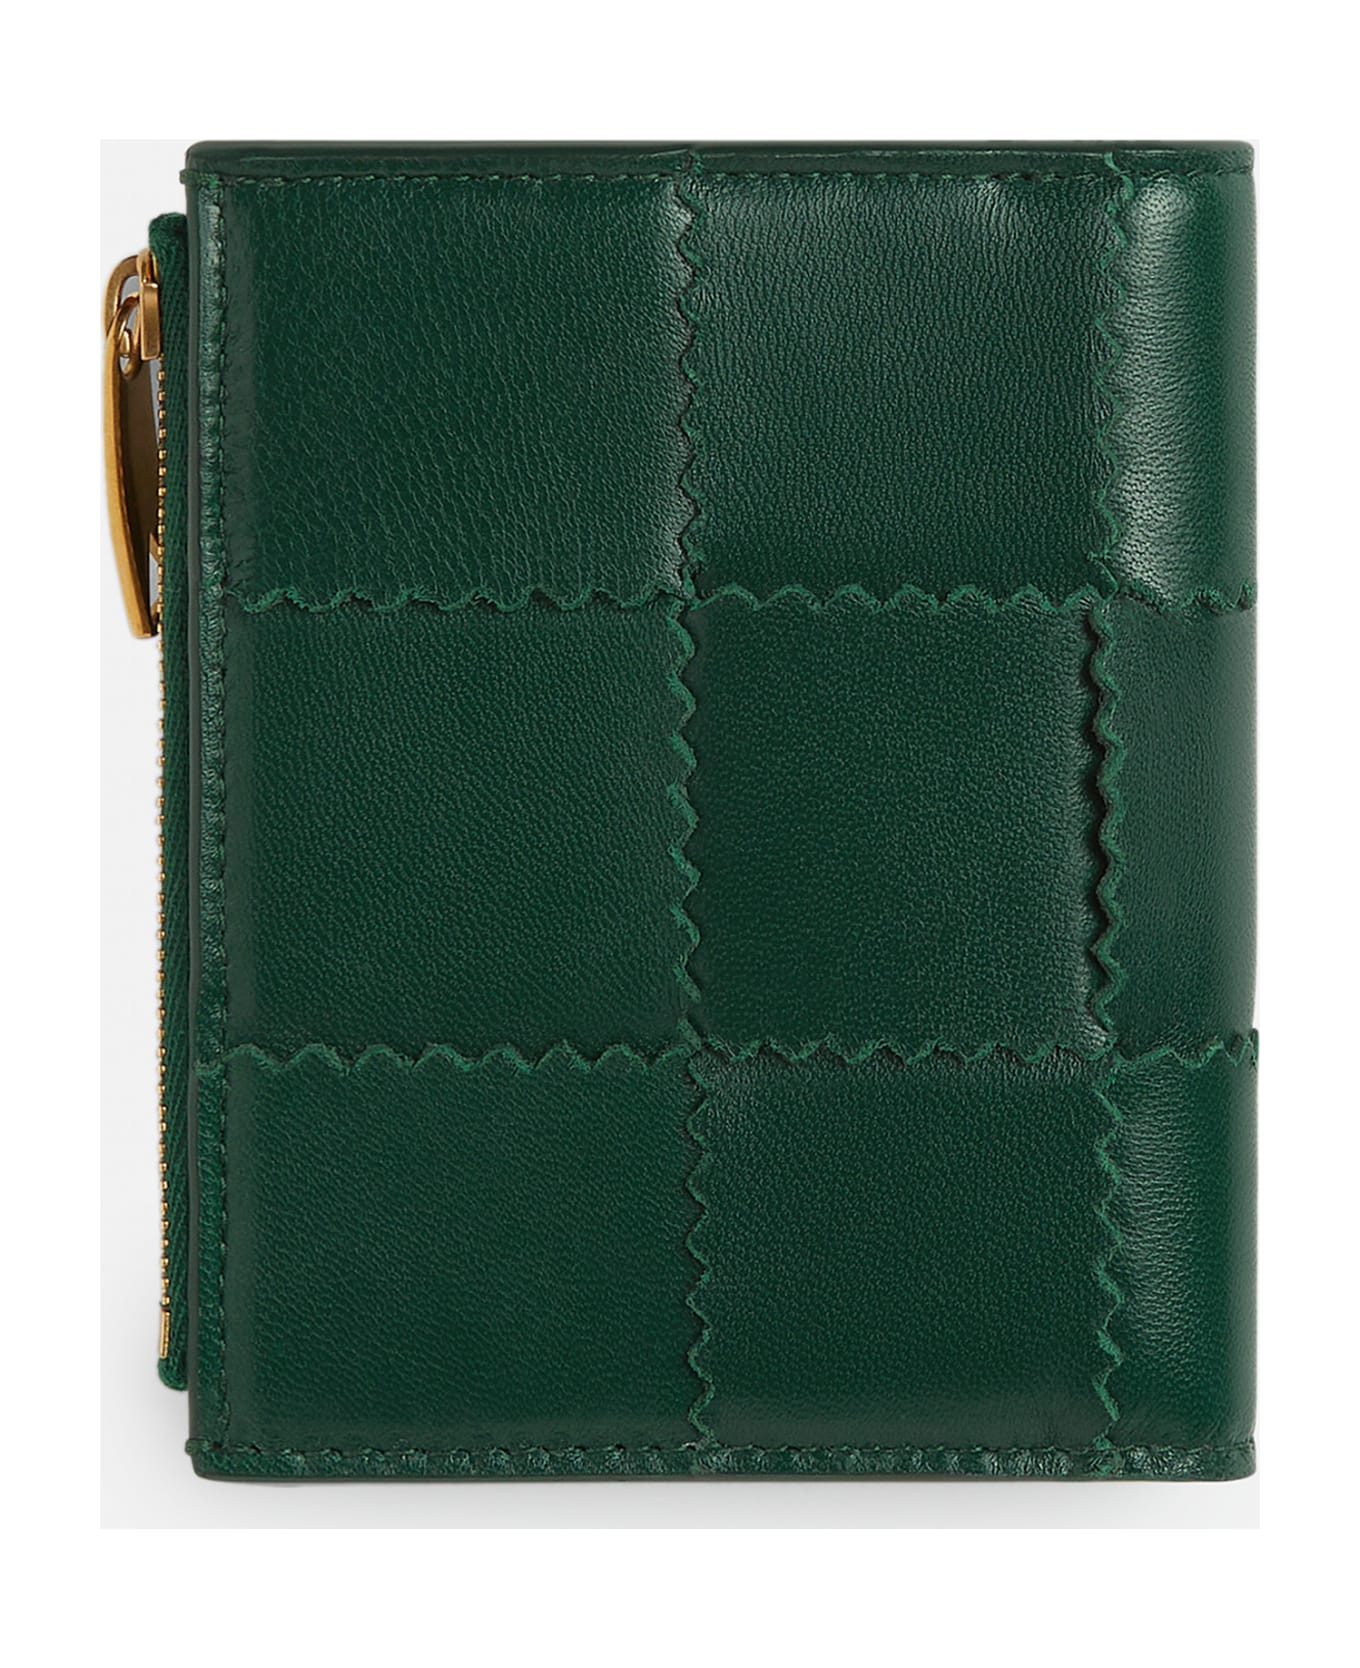 Bottega Veneta Small Bi-fold Leather Wallet - Green 財布